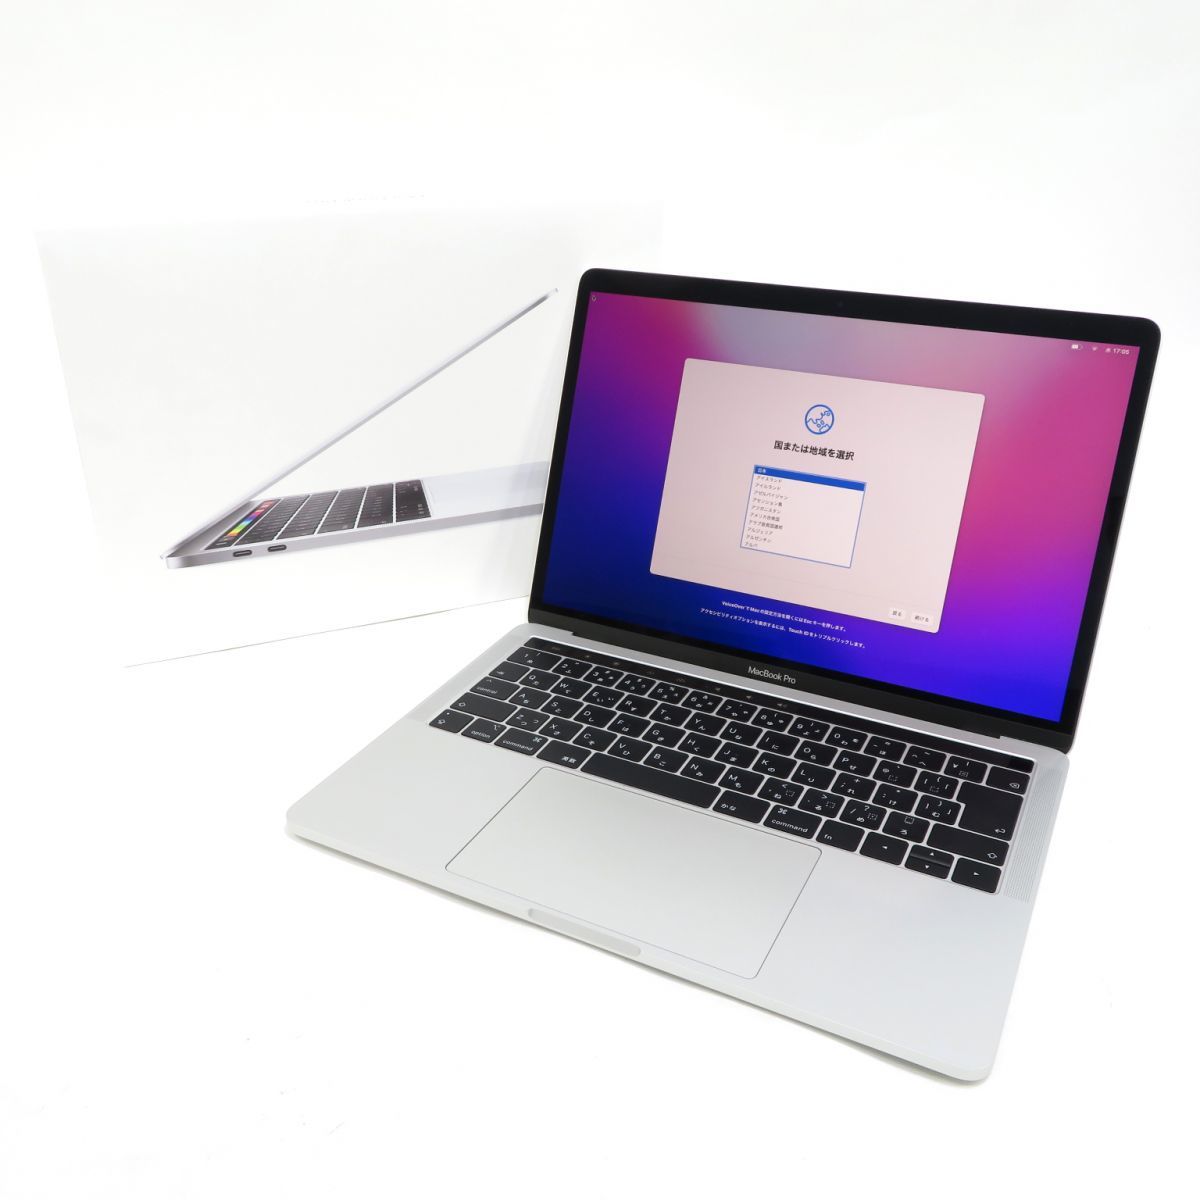 Apple MacBook Pro Retinaディスプレイ 1400/13.3 MUHQ2J/A [シルバー 